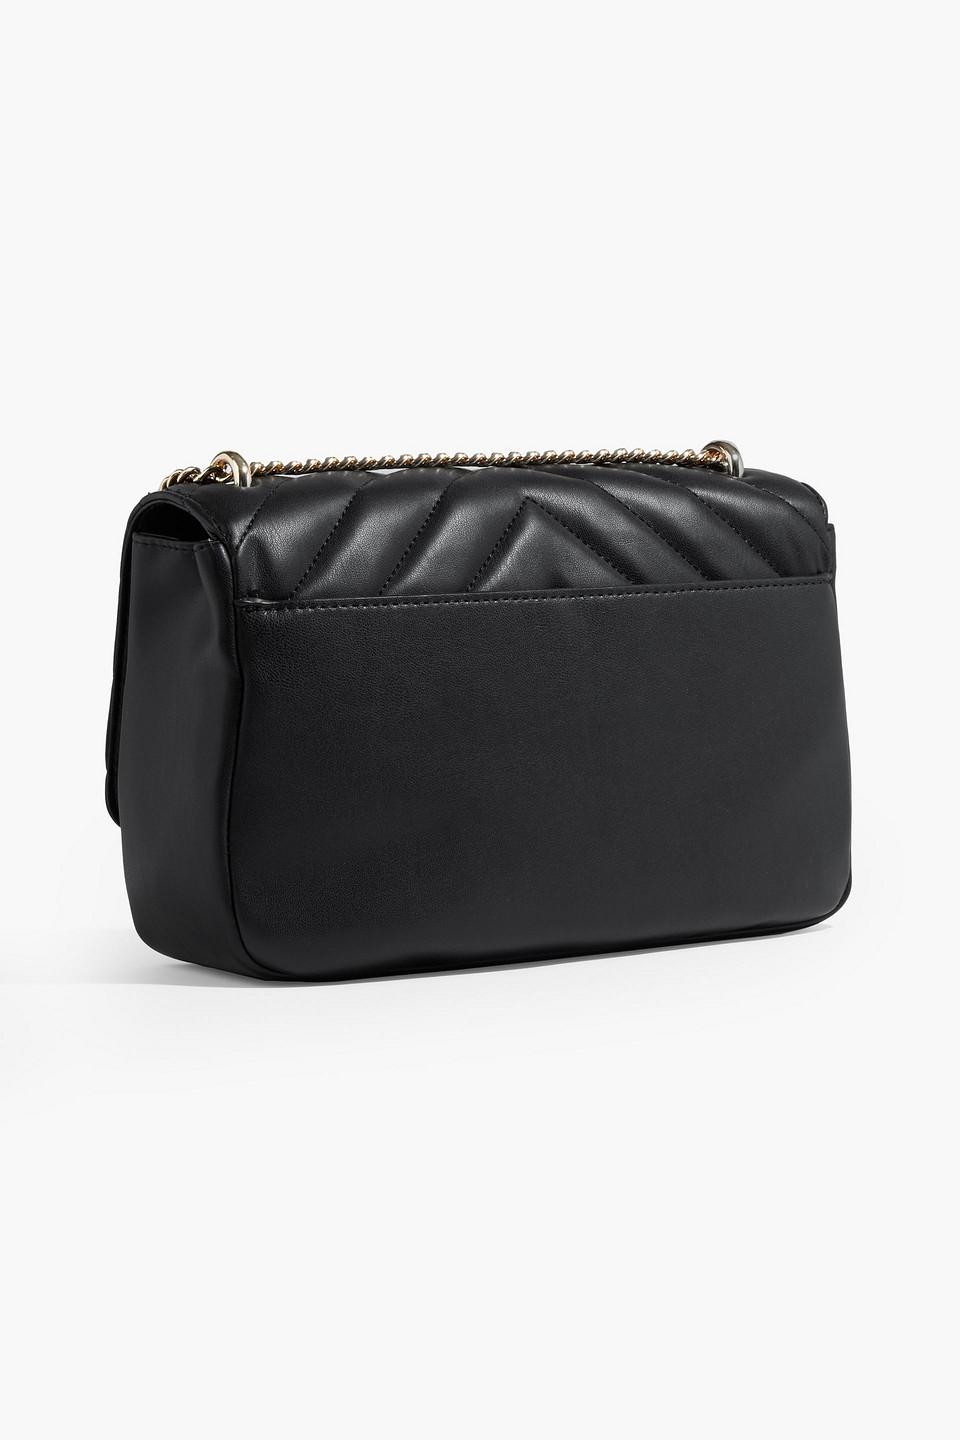 Brand New DKNY Veronica Shoulder/Crossbody Bag